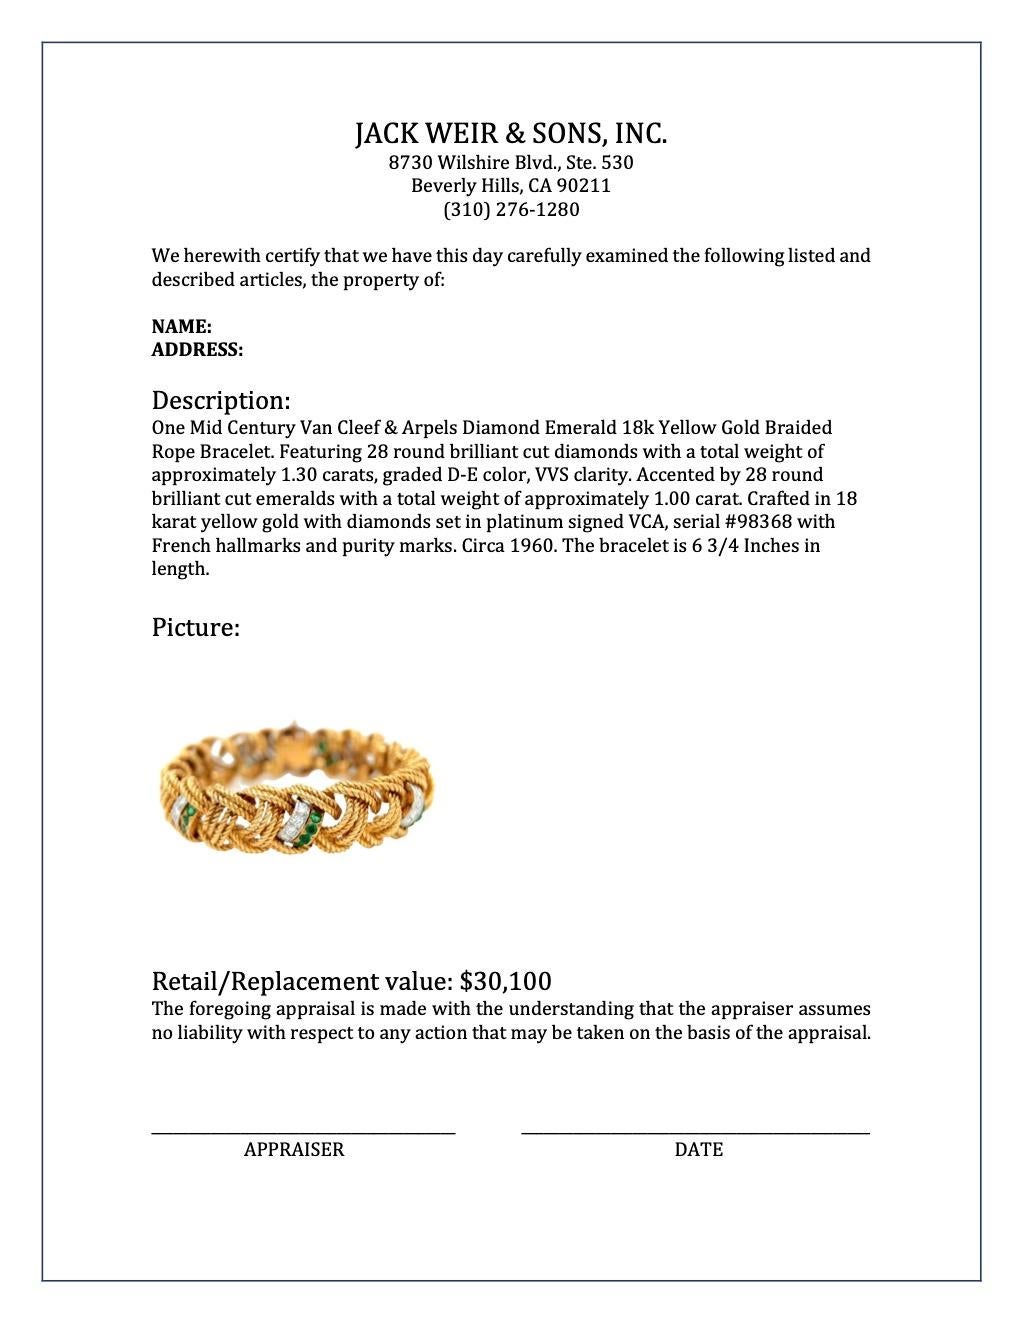 Mid Century Van Cleef & Arpels Diamond Emerald 18k Yellow Gold Rope Bracelet 1